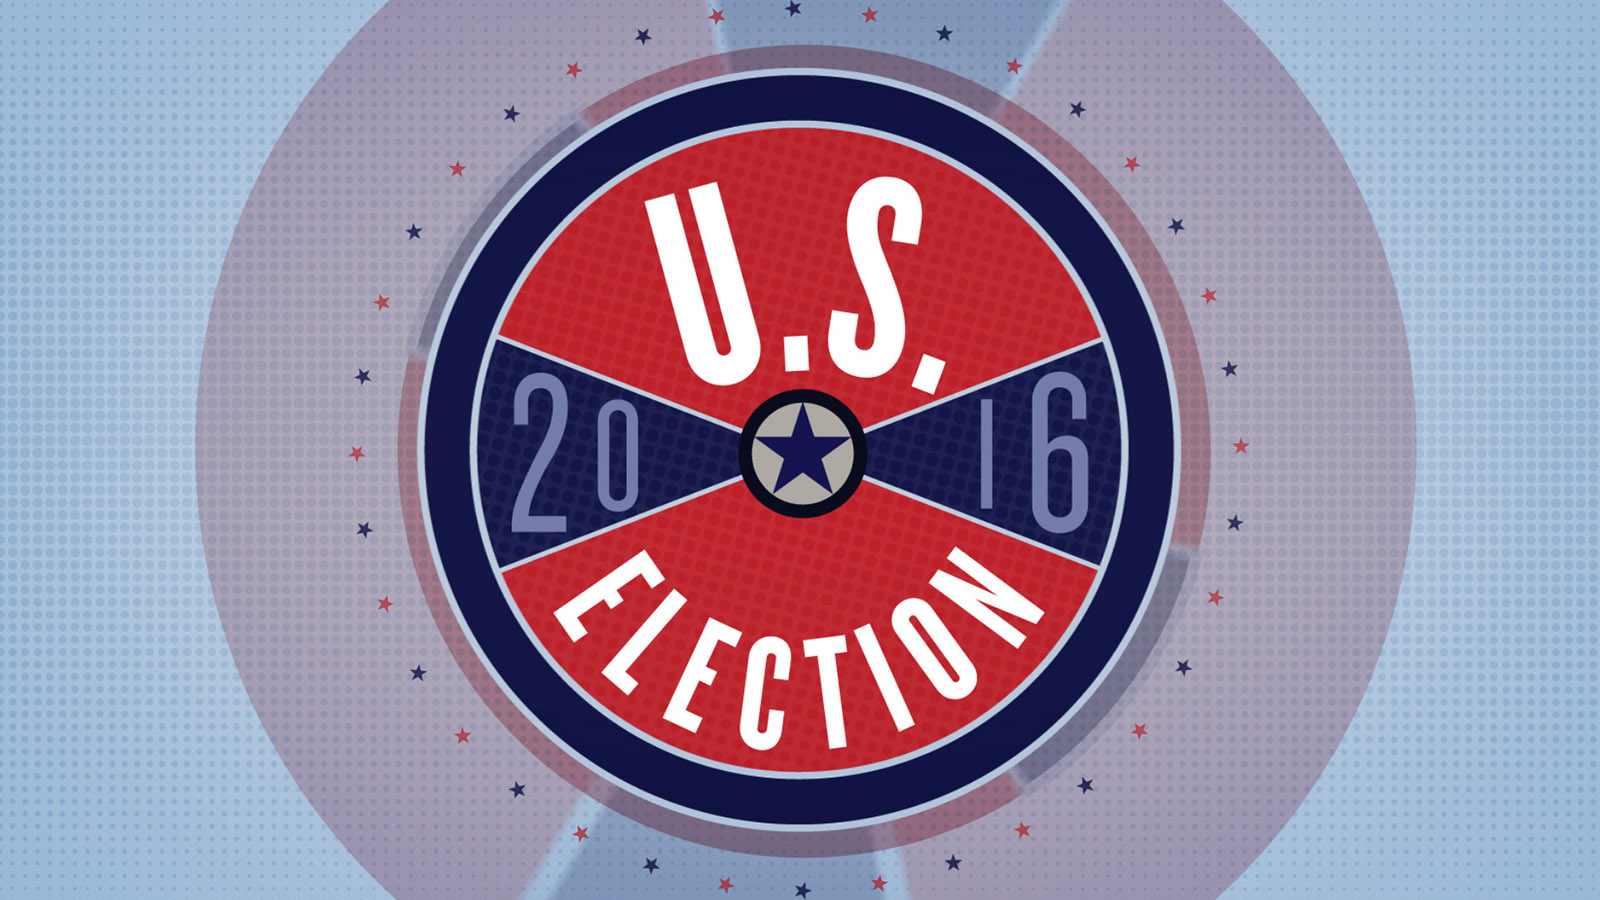 The 2016 U.S. Election